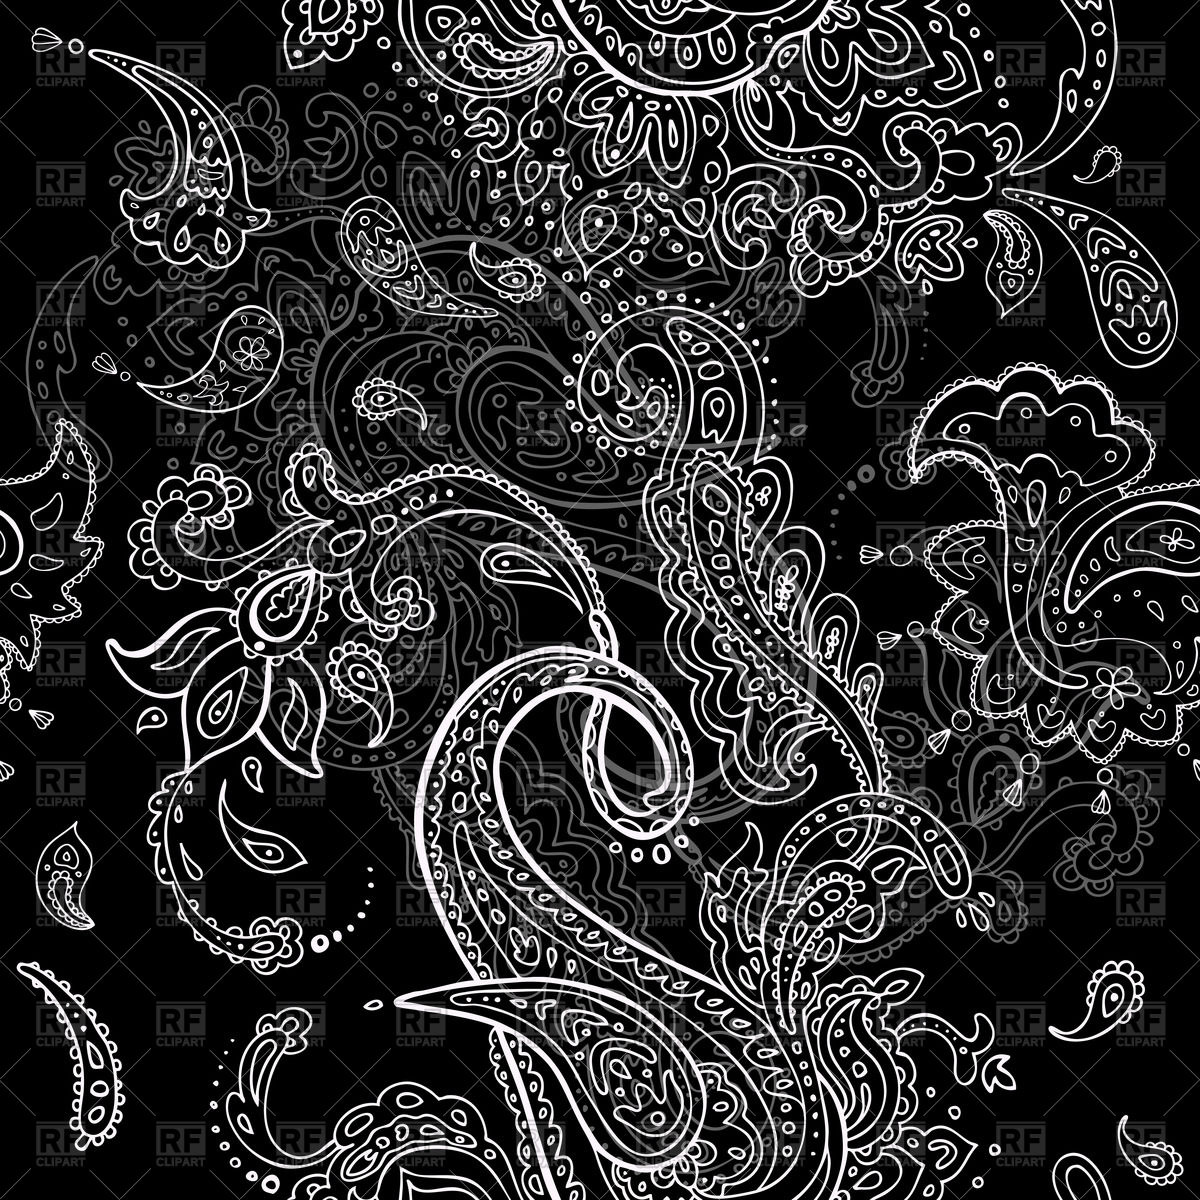 Black And White Paisley Desktop Background